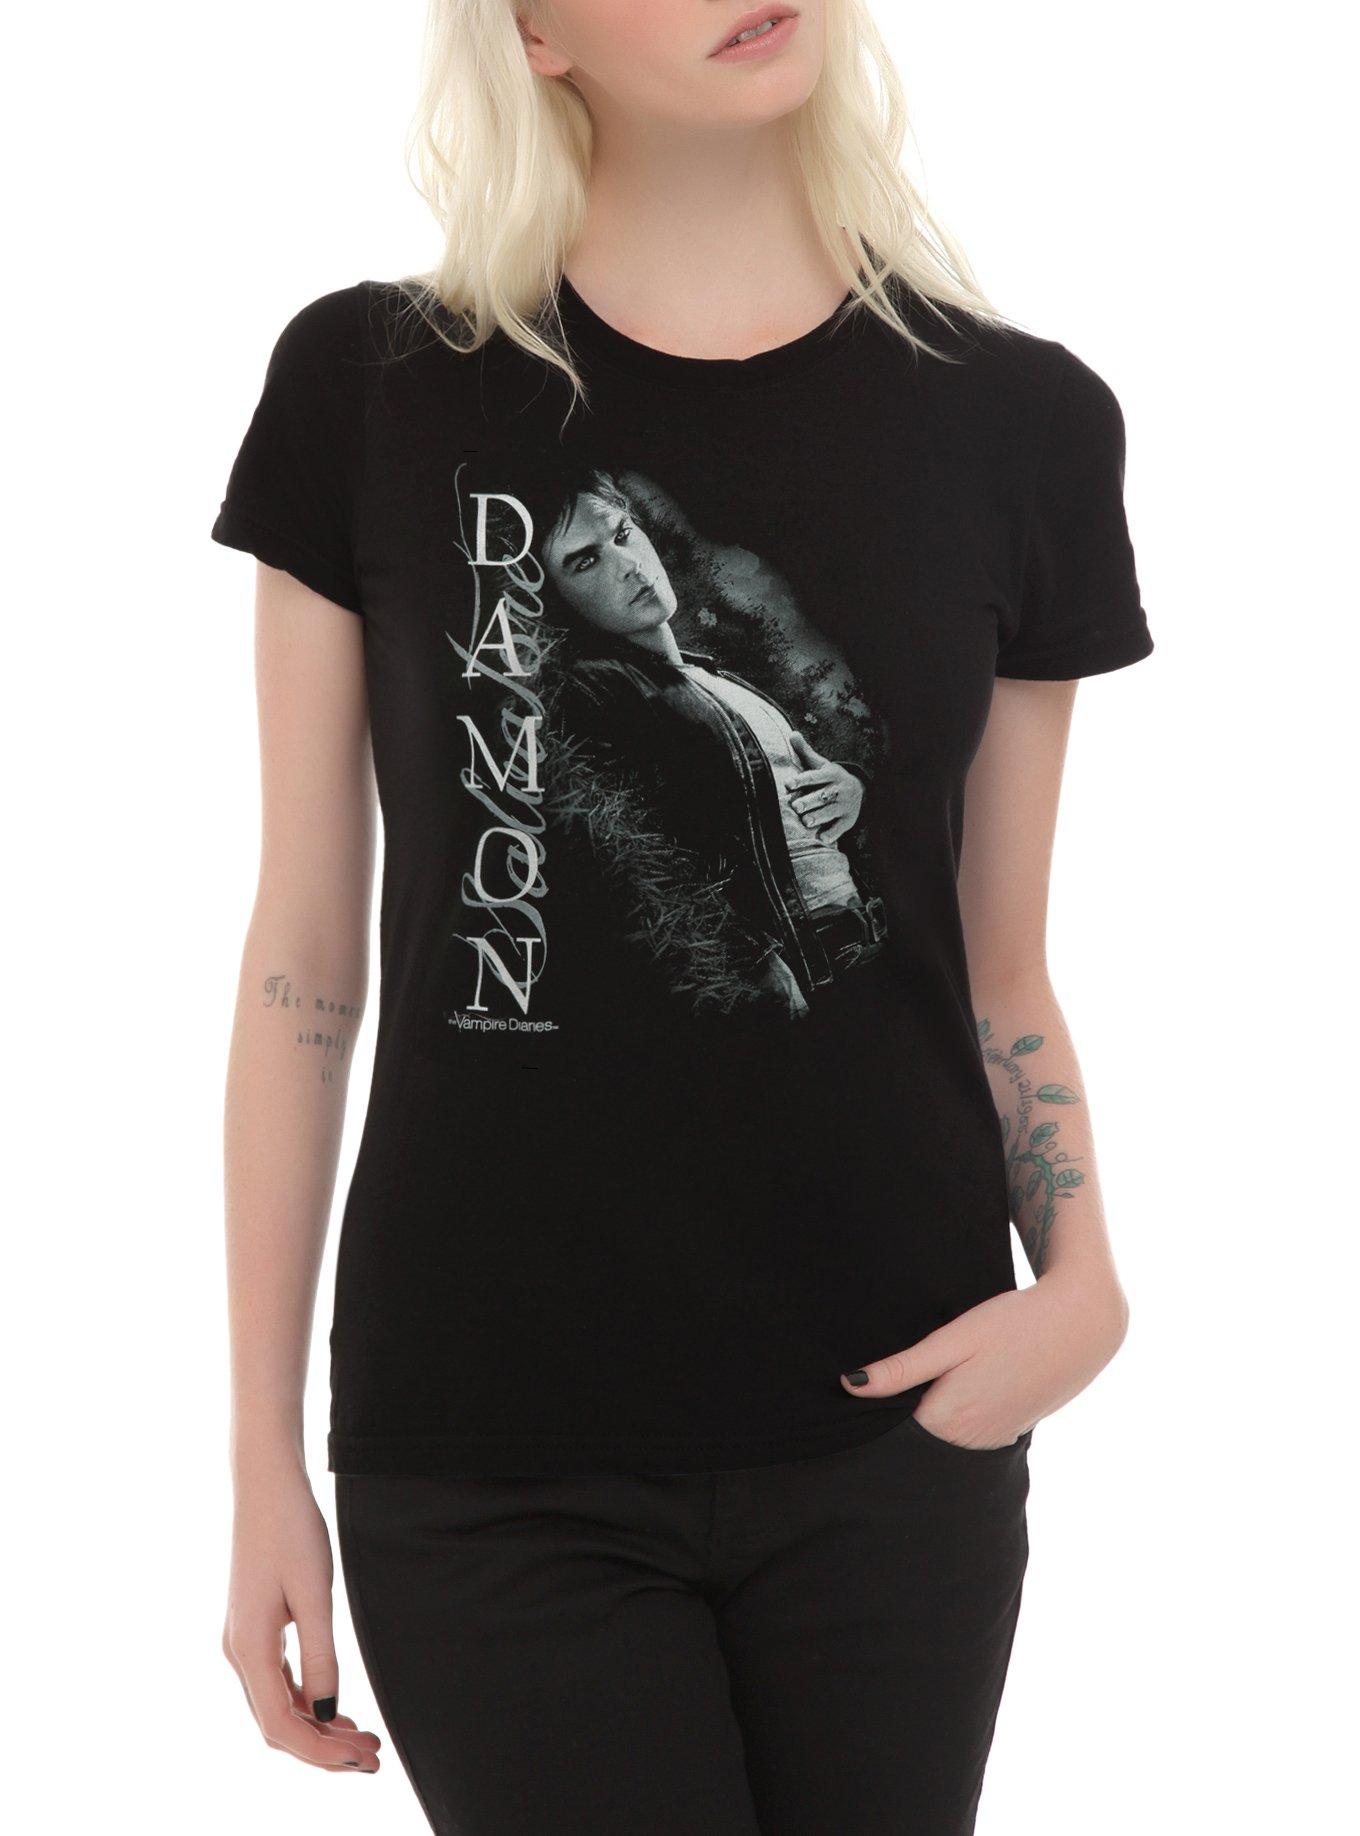  Vampire Diaries Merchandise